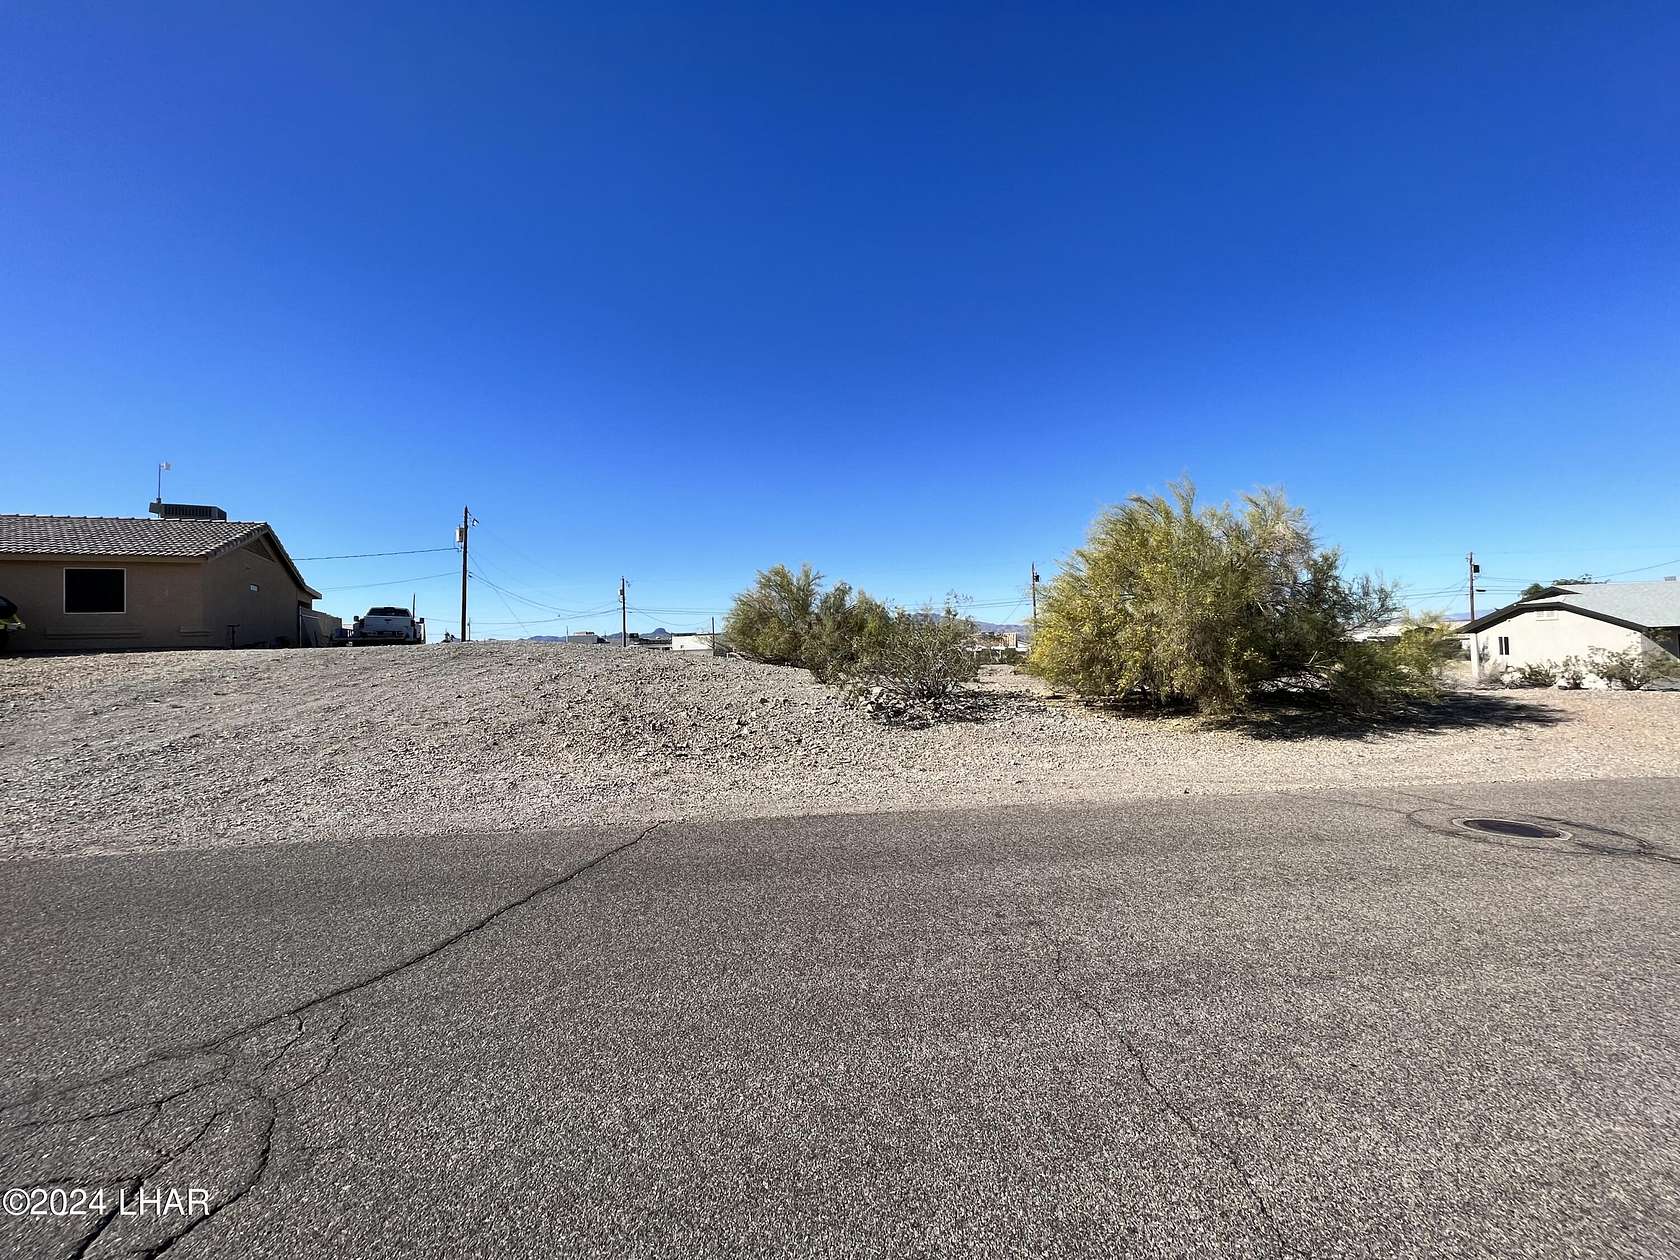 0.34 Acres of Residential Land for Sale in Lake Havasu City, Arizona